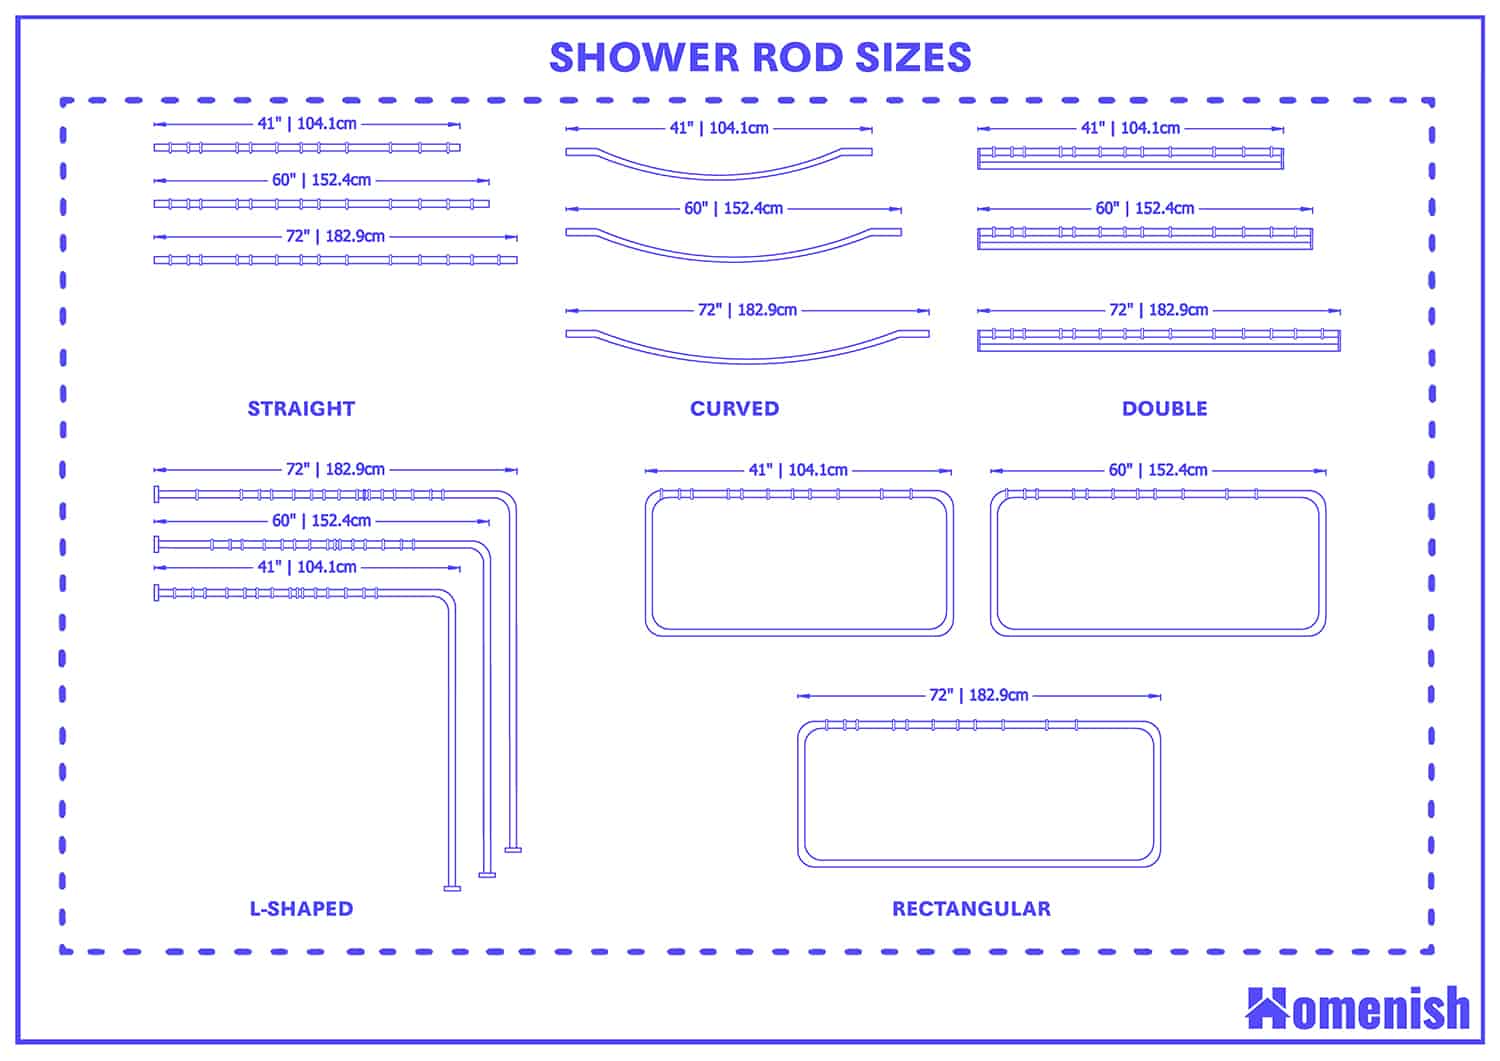 Shower rod sizes